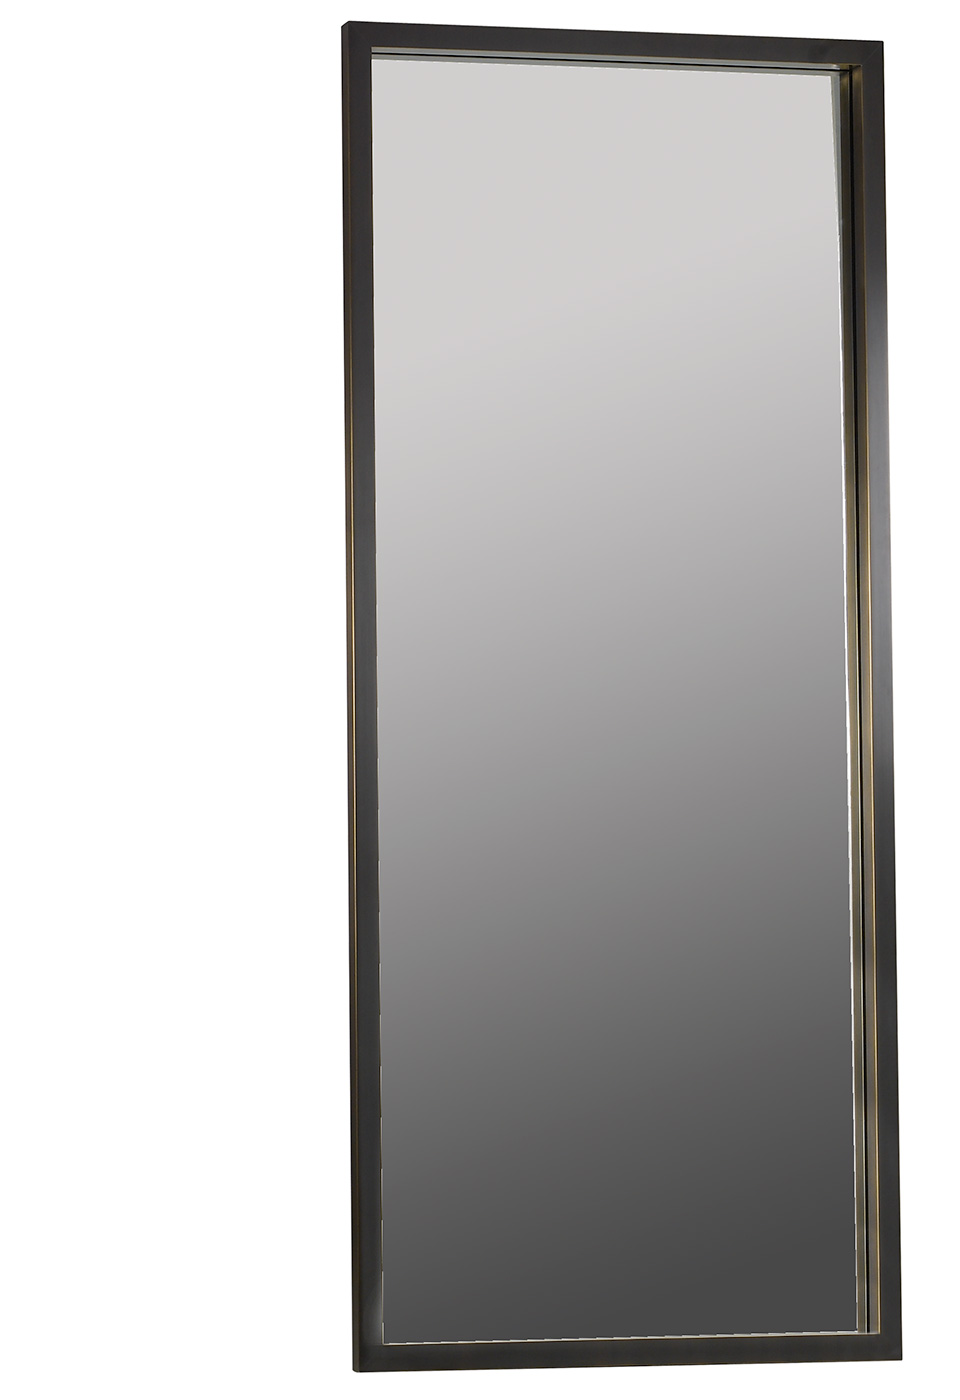 Orfeo — настенное зеркало с бронзовой рамкой из каталога Promemoria | Promemoria